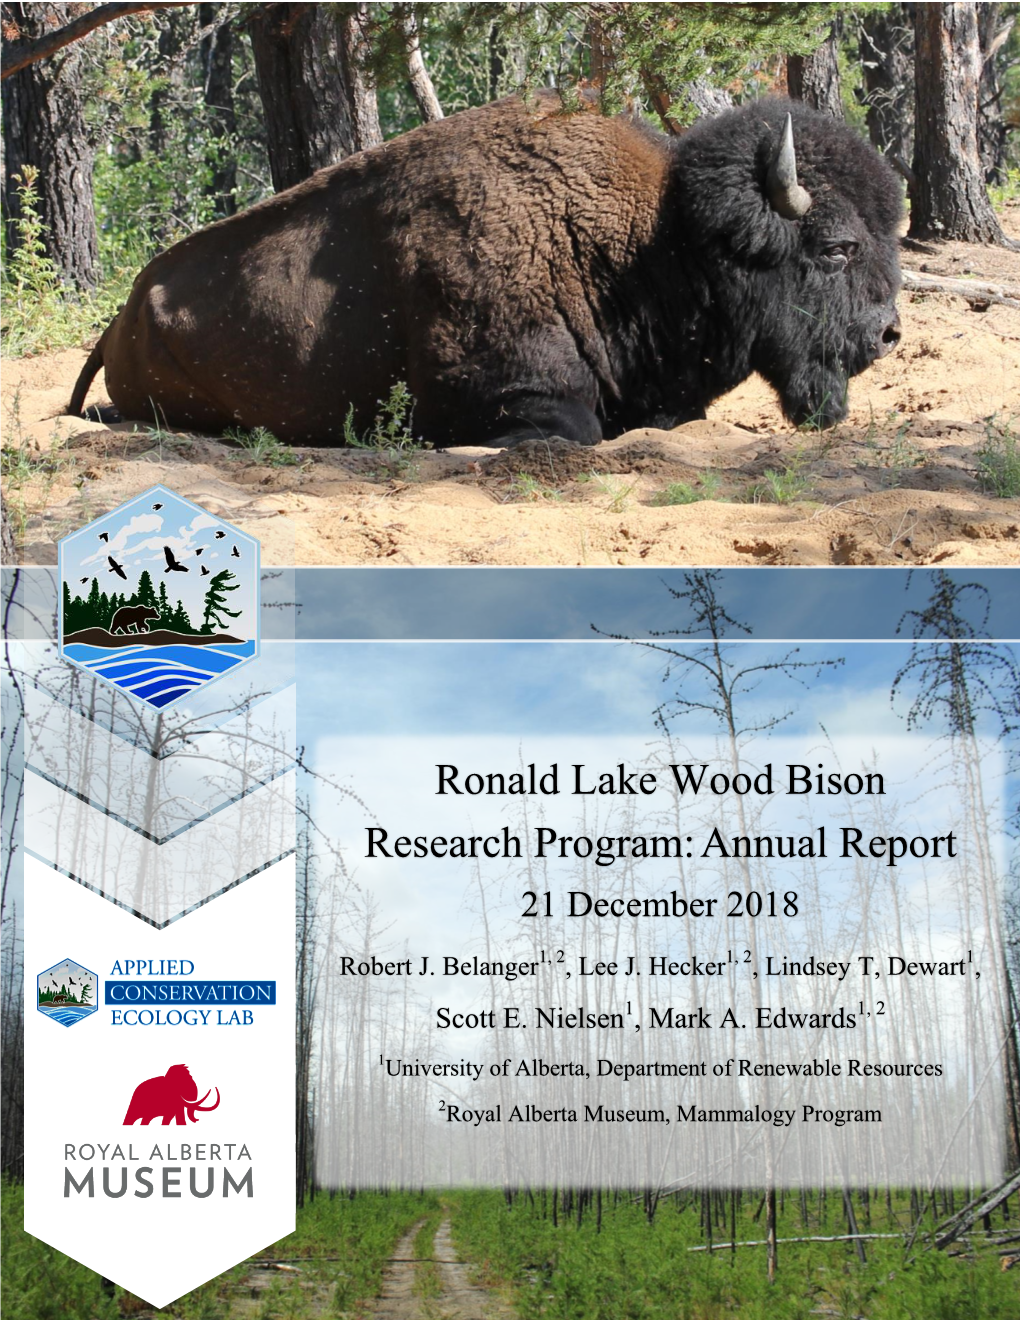 Ronald Lake Wood Bison Research Program:Annual Report: 21 December 2018